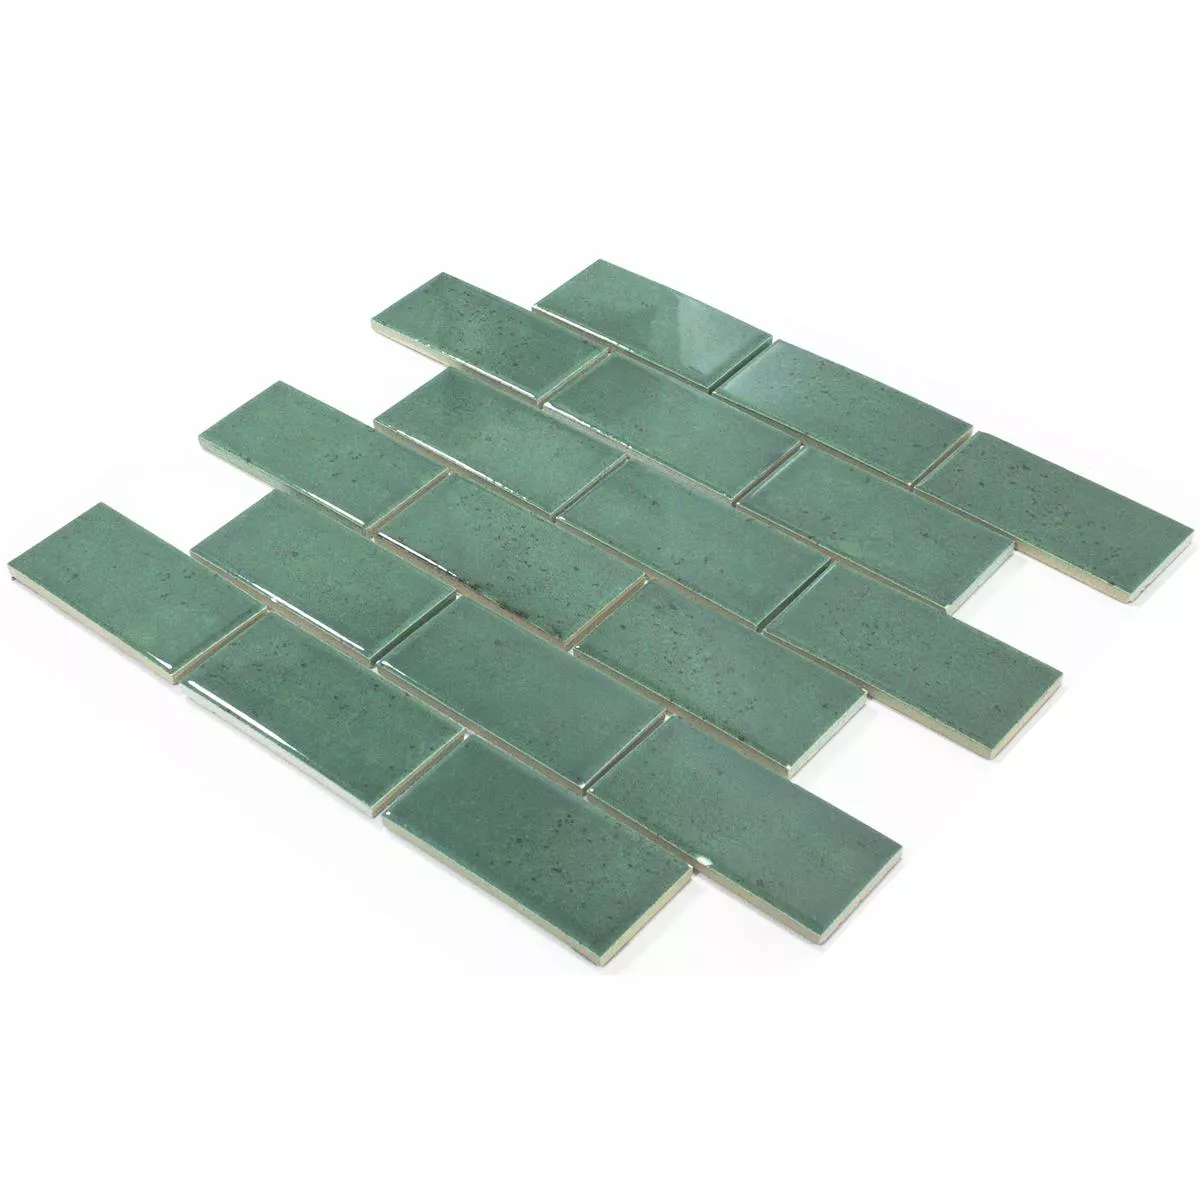 Ceramic Mosaic Tiles Eldertown Brick Dark Green